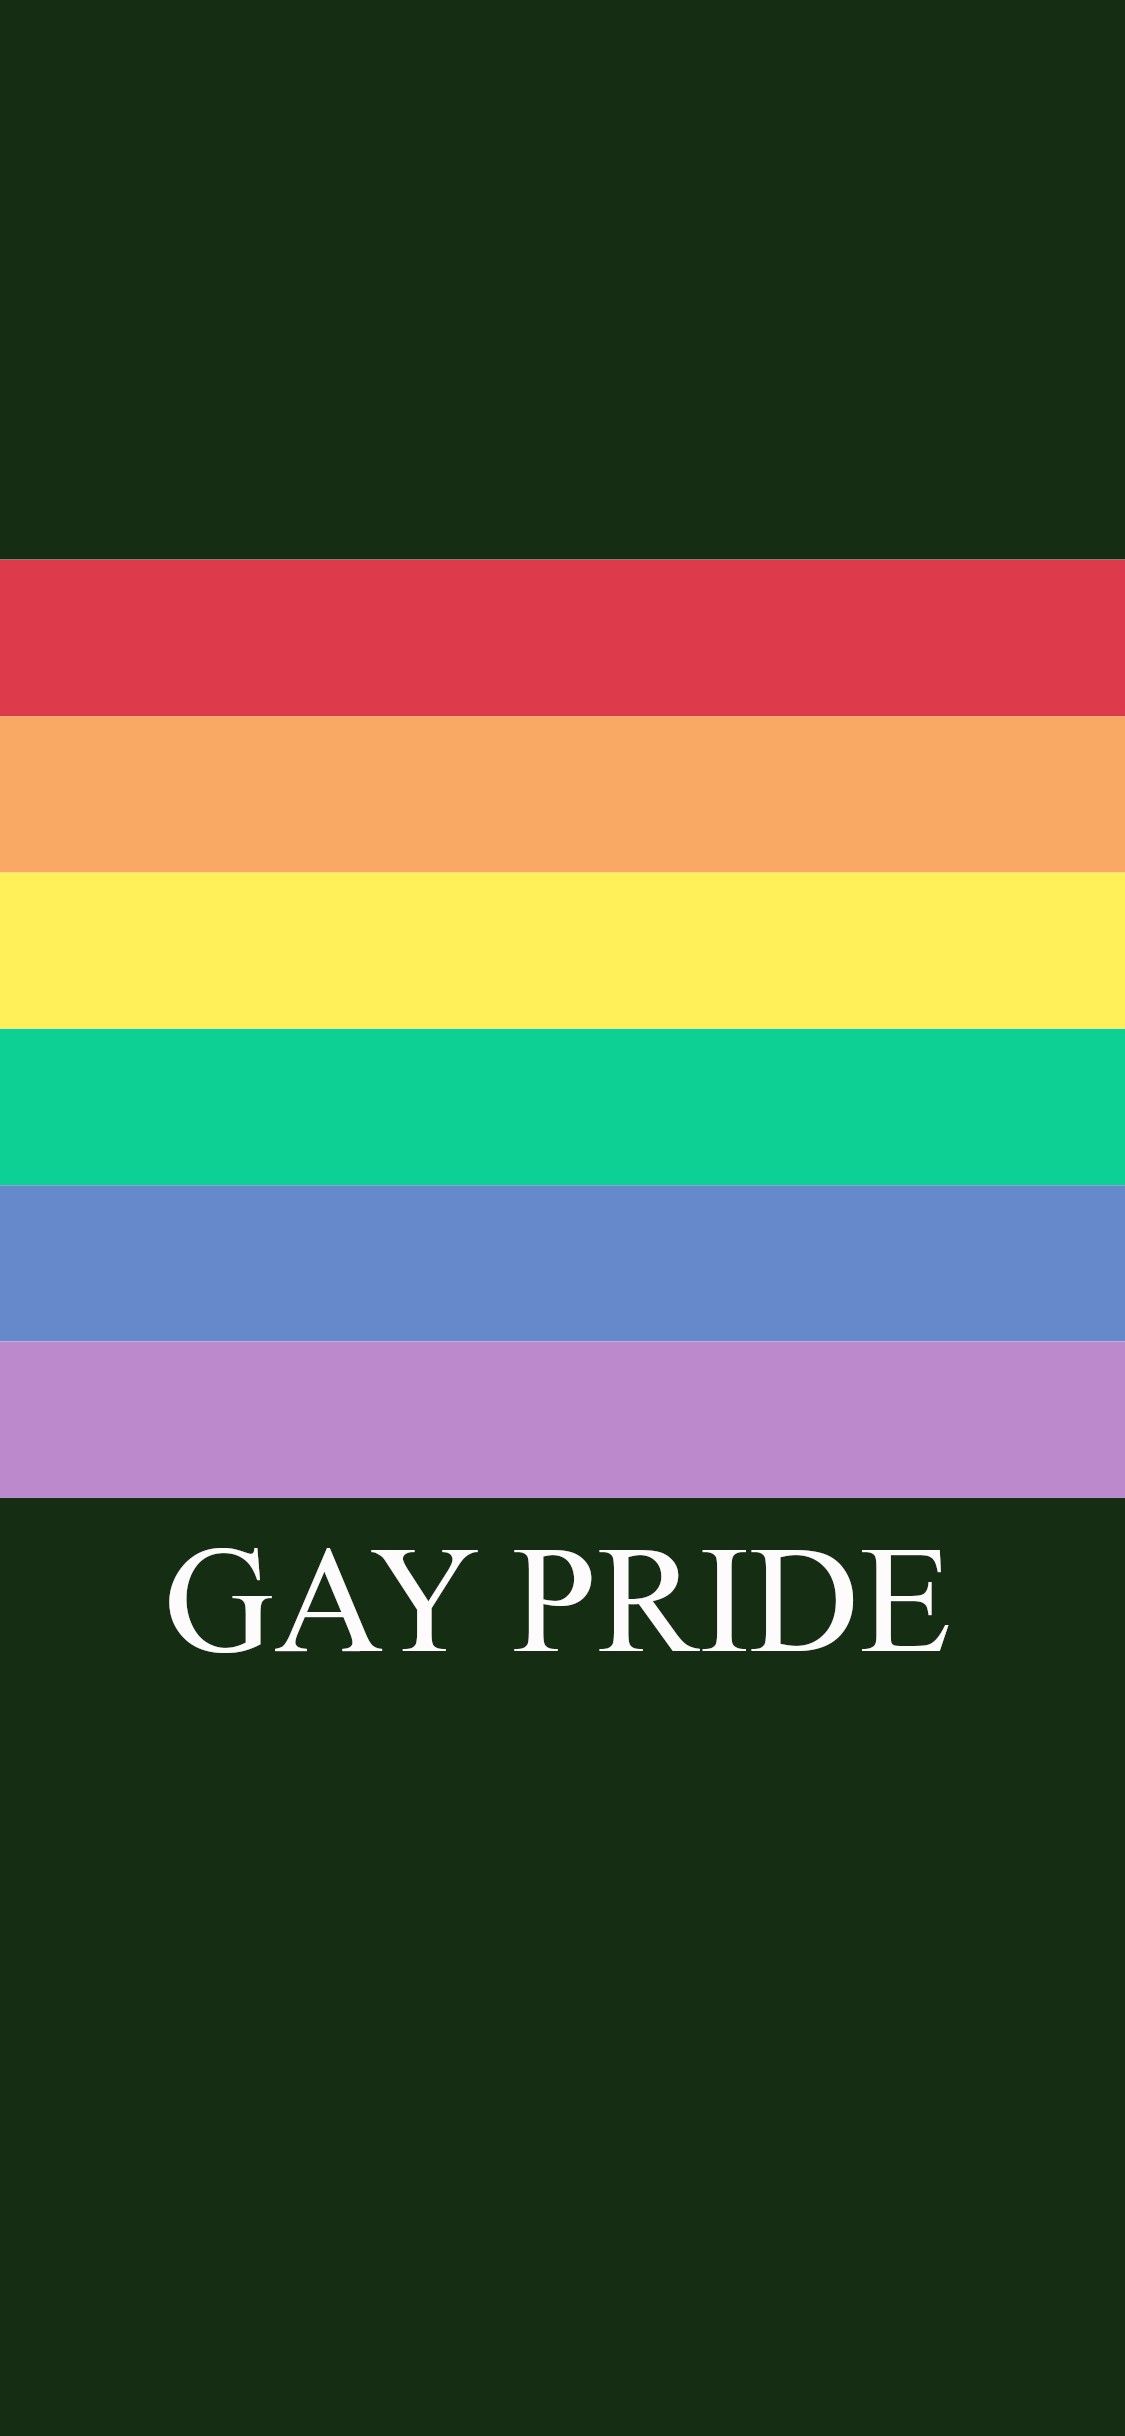 Lesbian, Gay, Bisexual, Transgender, Questioning (LGBTQ) free phone